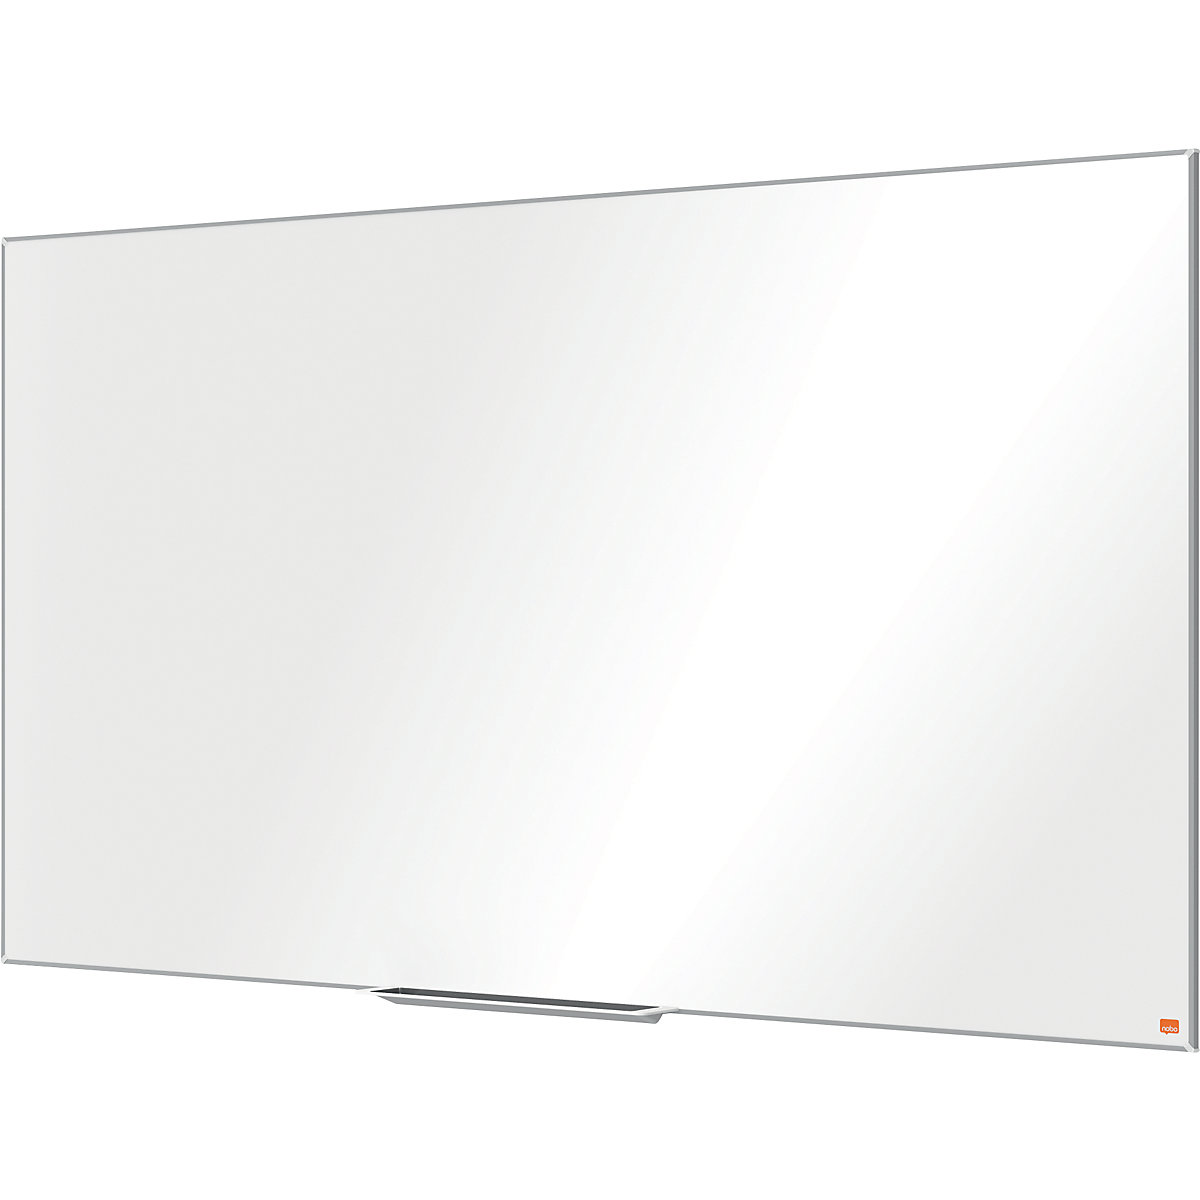 Whiteboard Nano Clean™ PRO nobo, Widescreen-Format, Stahl lackiert, 70'', BxH 1554 x 876 mm